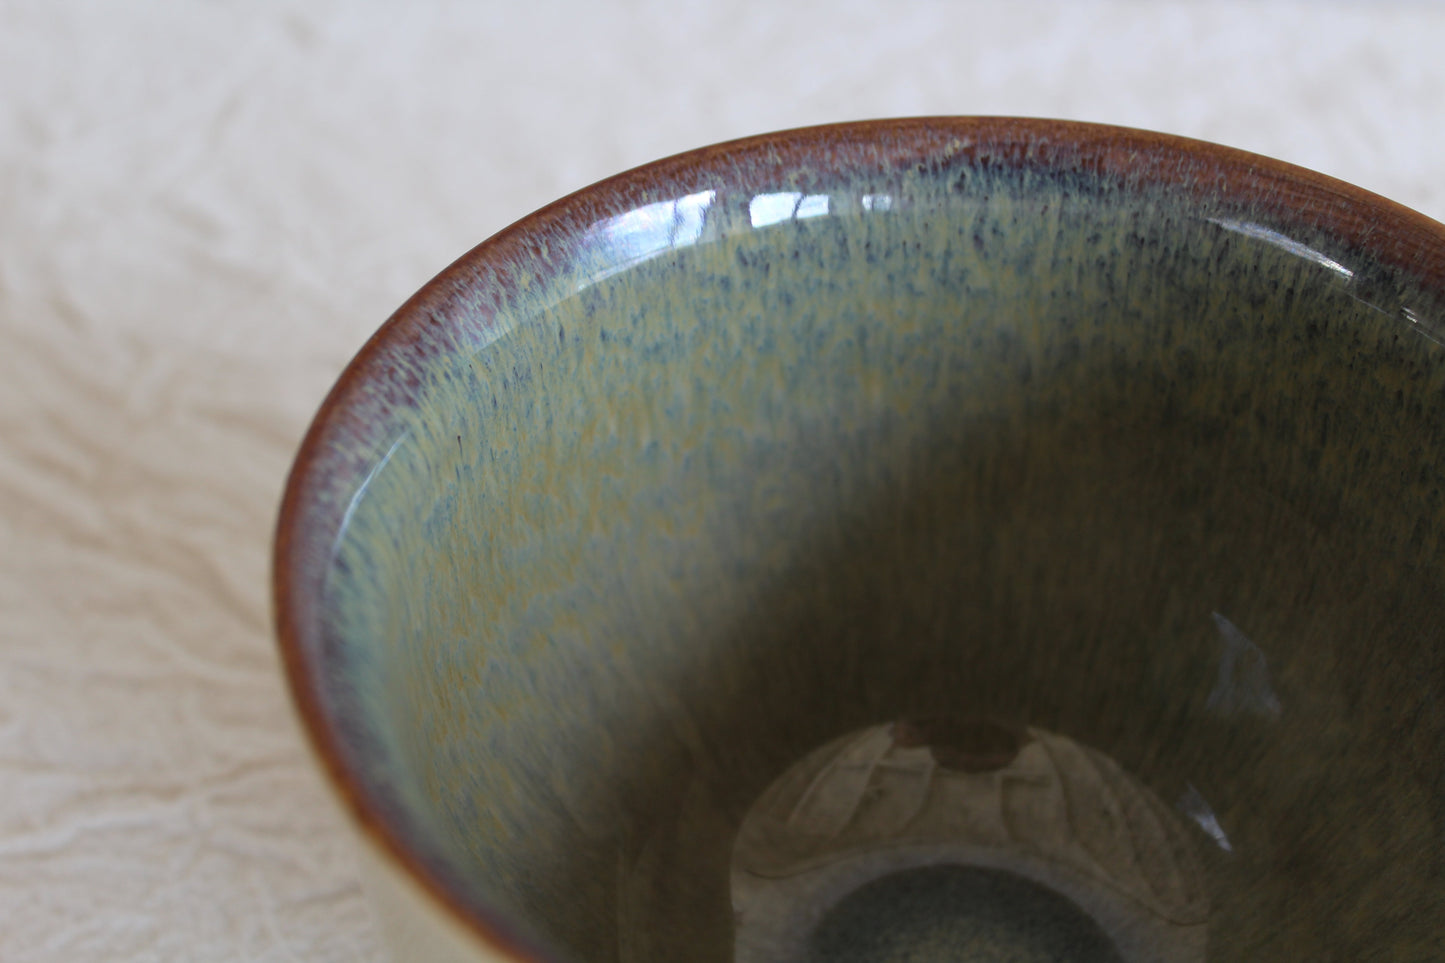 Details of the Dashi Bowl Sable by Jars Ceramistes.